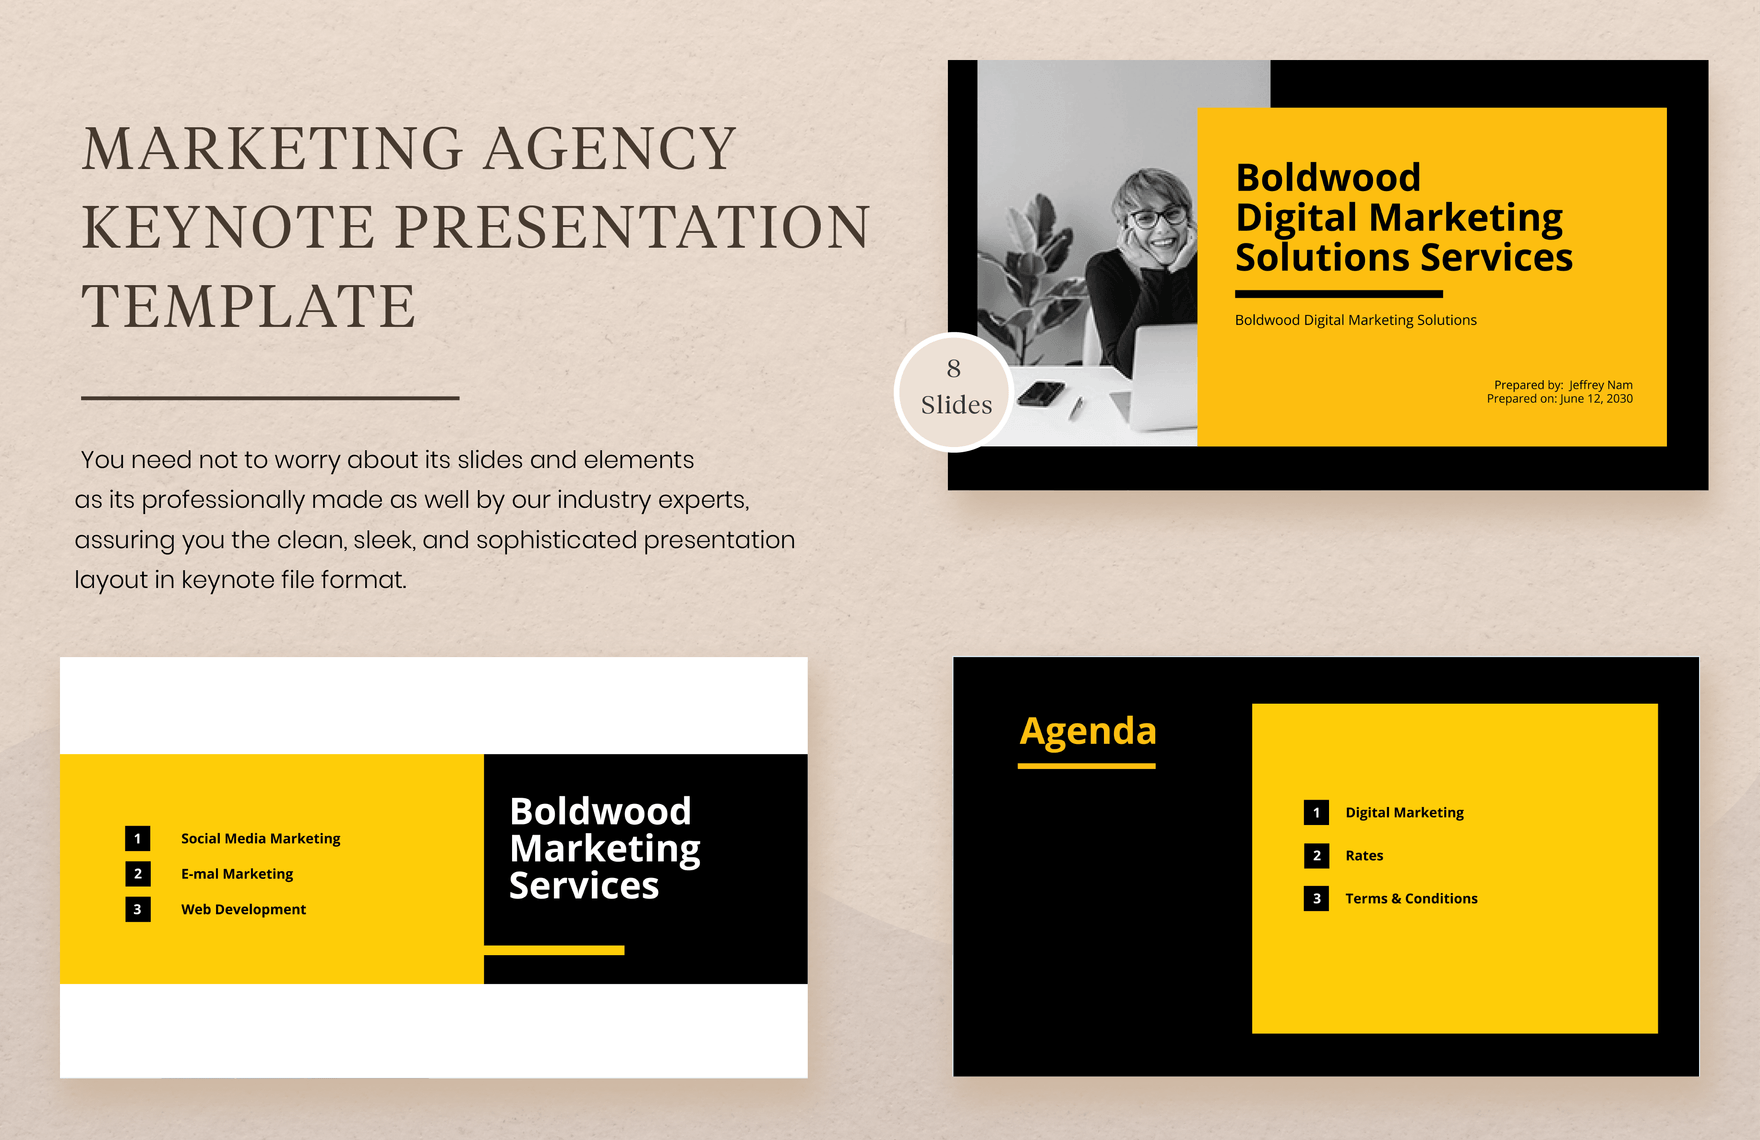 Marketing Agency Keynote Presentation Template in PowerPoint, Google Slides